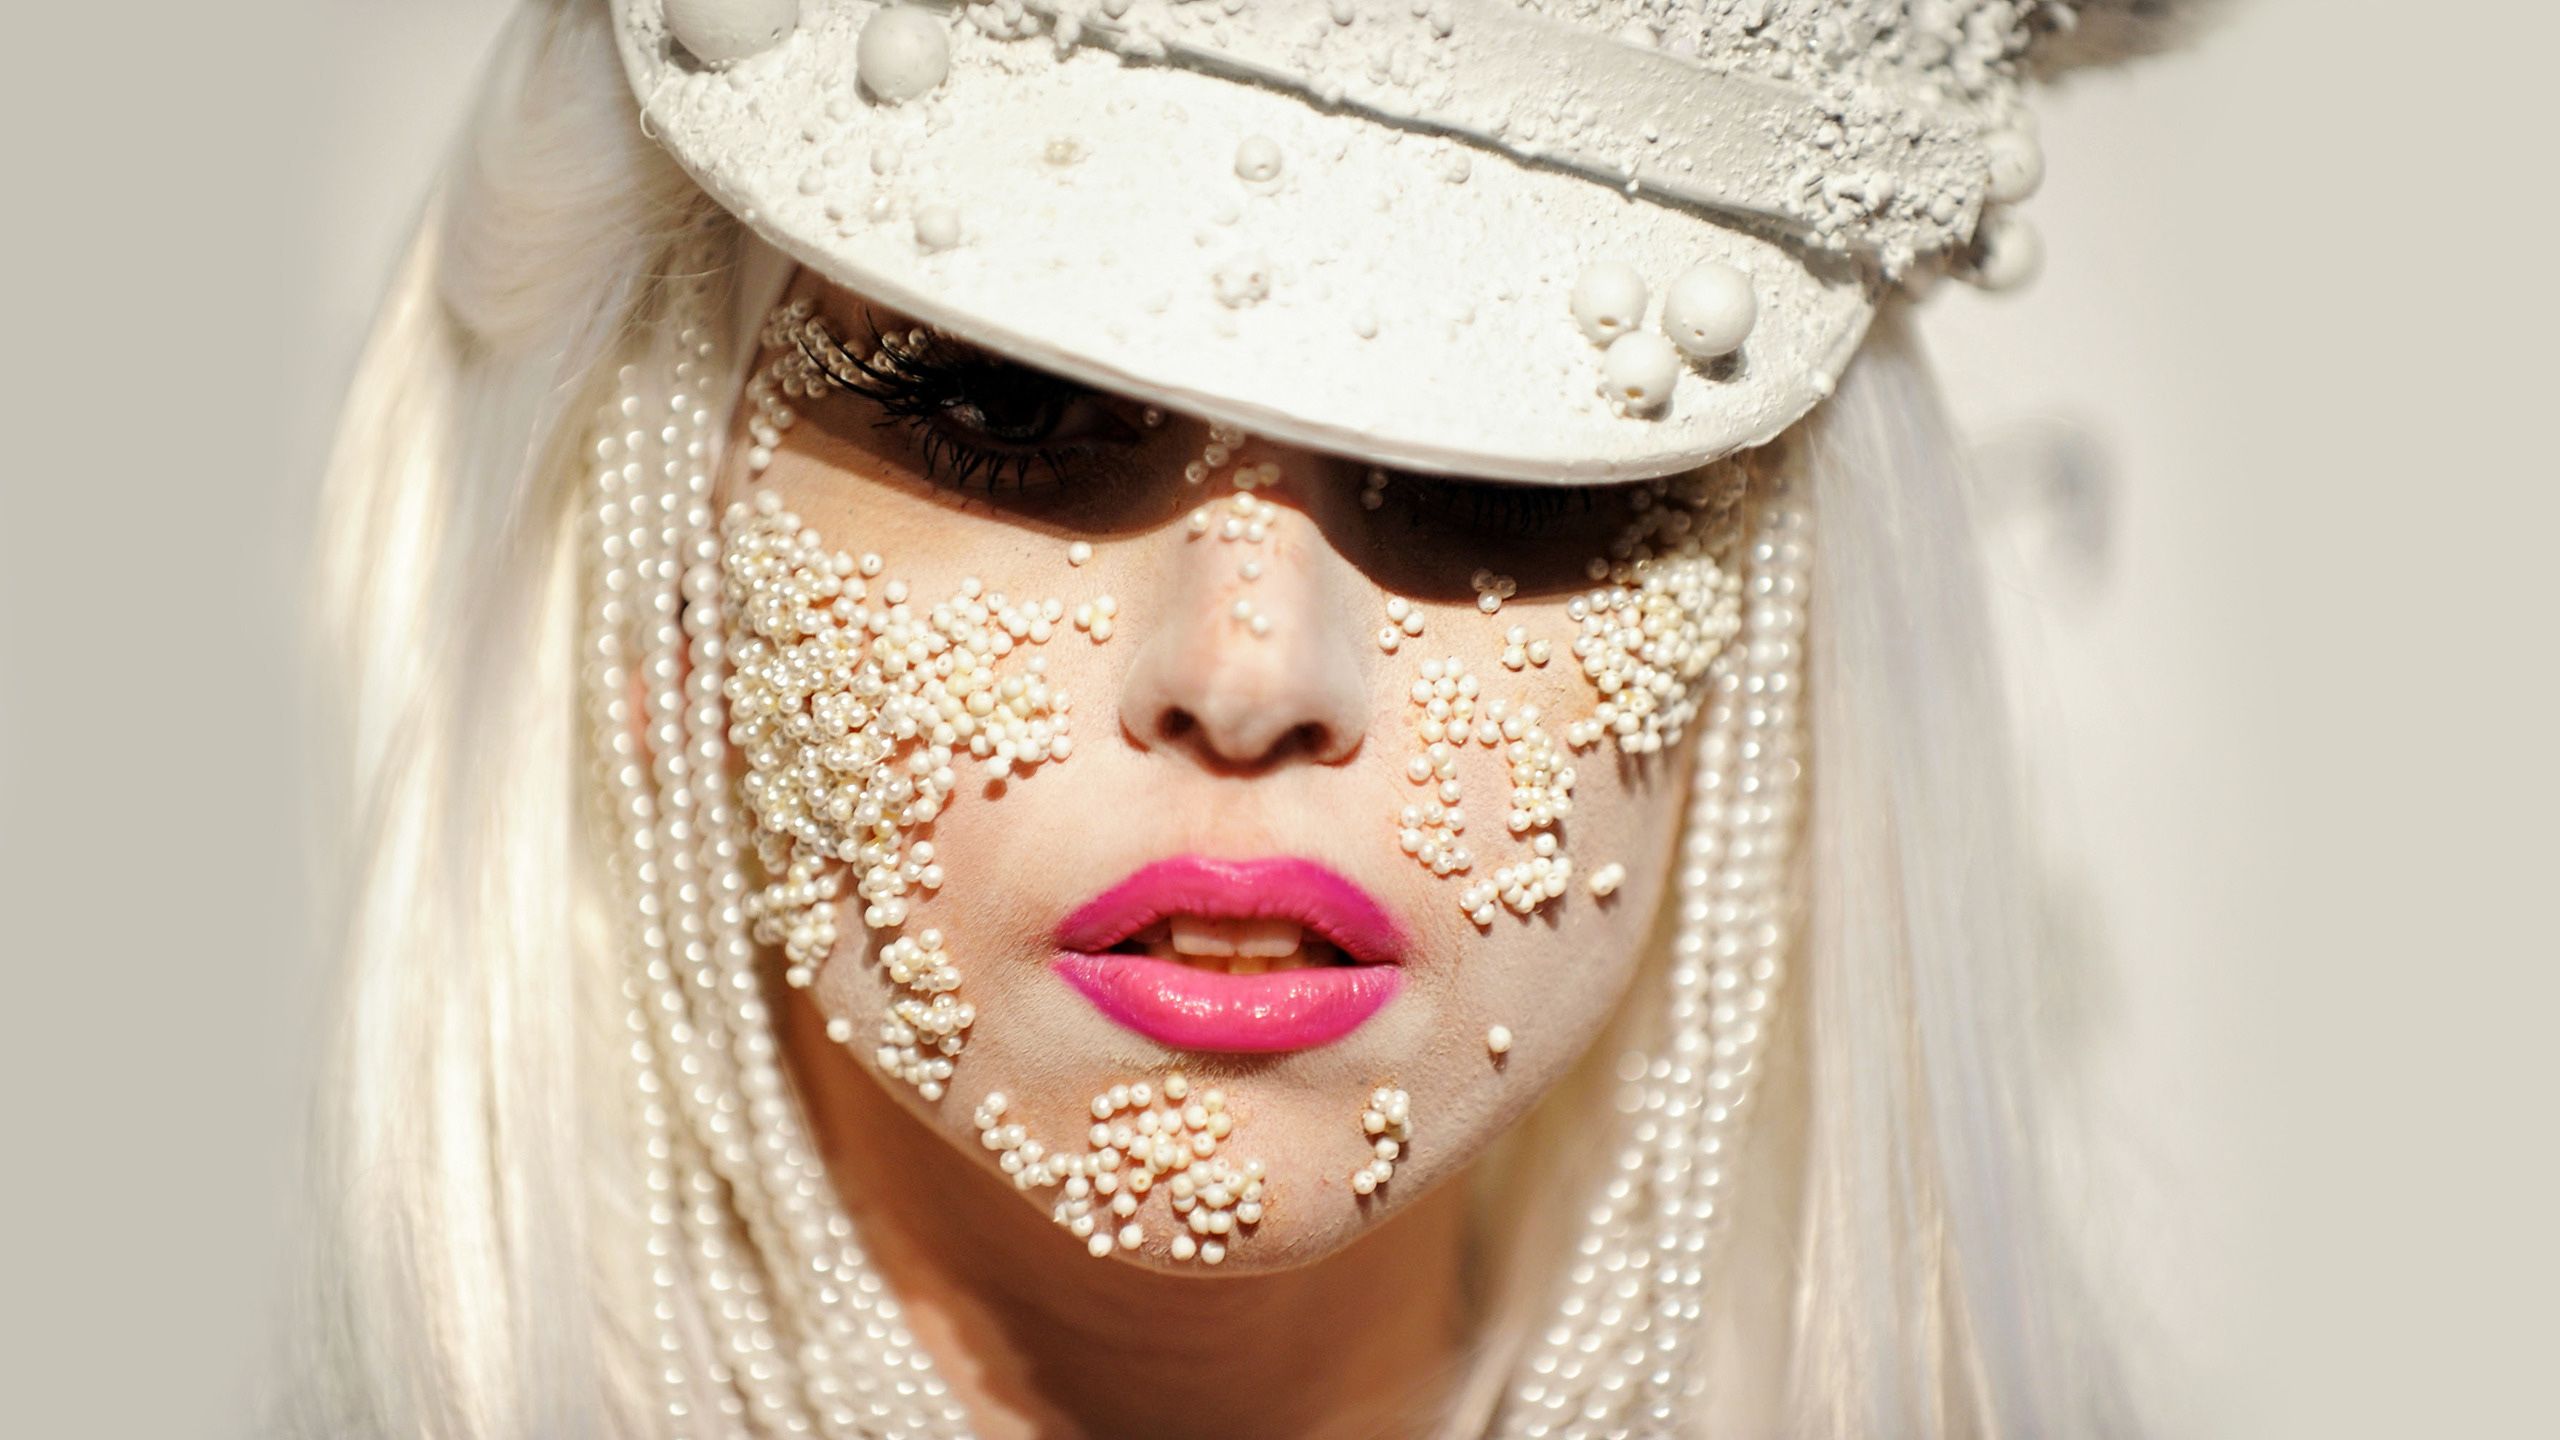 Lady Gaga HD Image Wallpaper Image